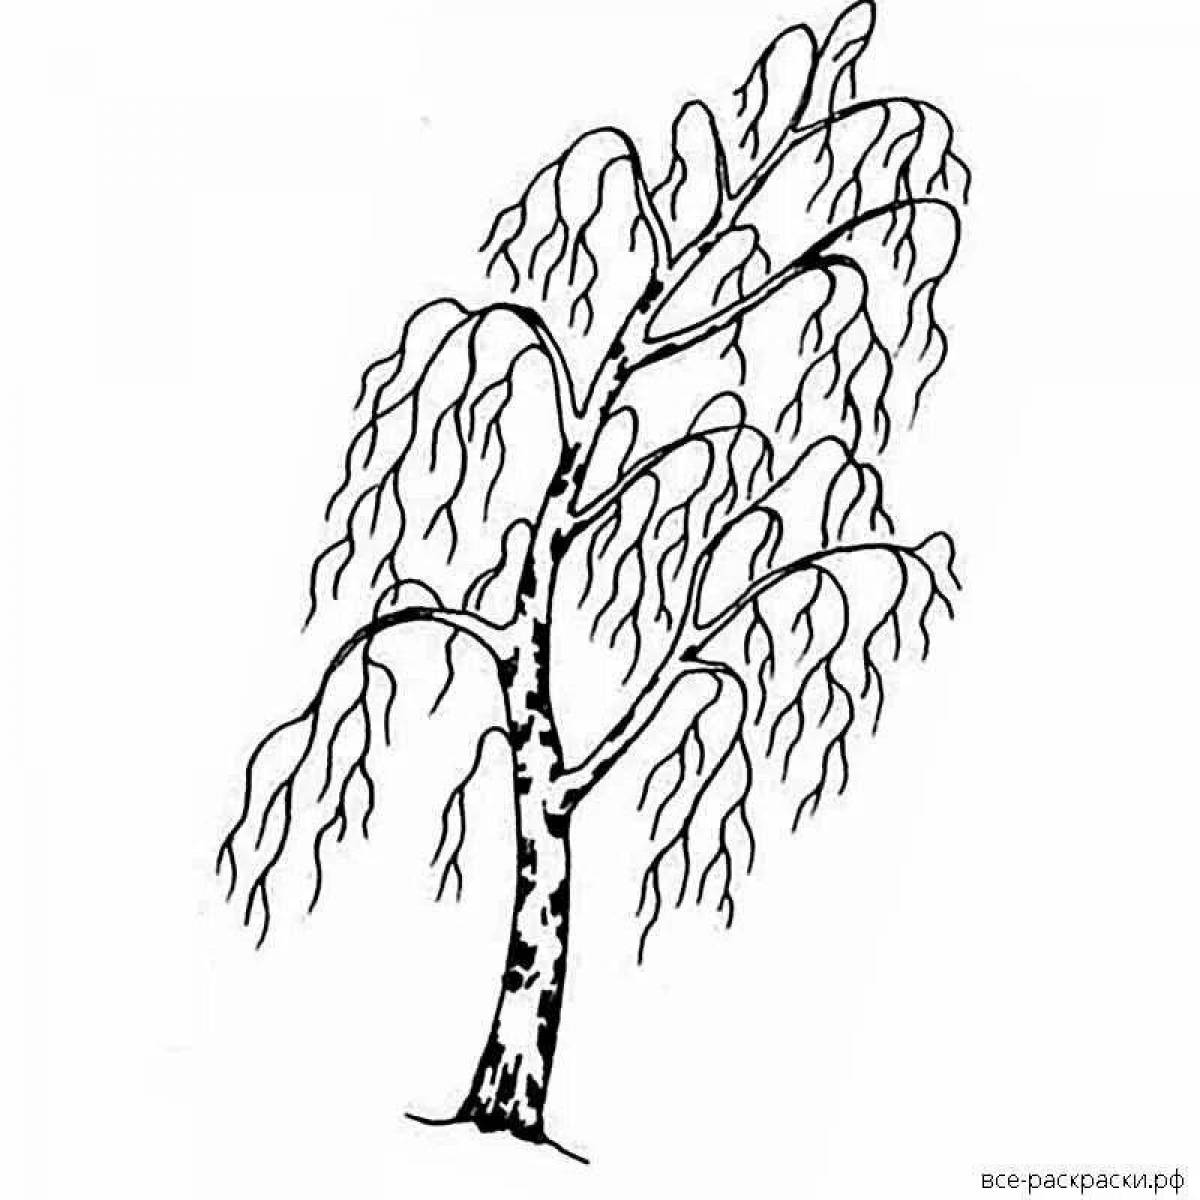 Birch in winter #1